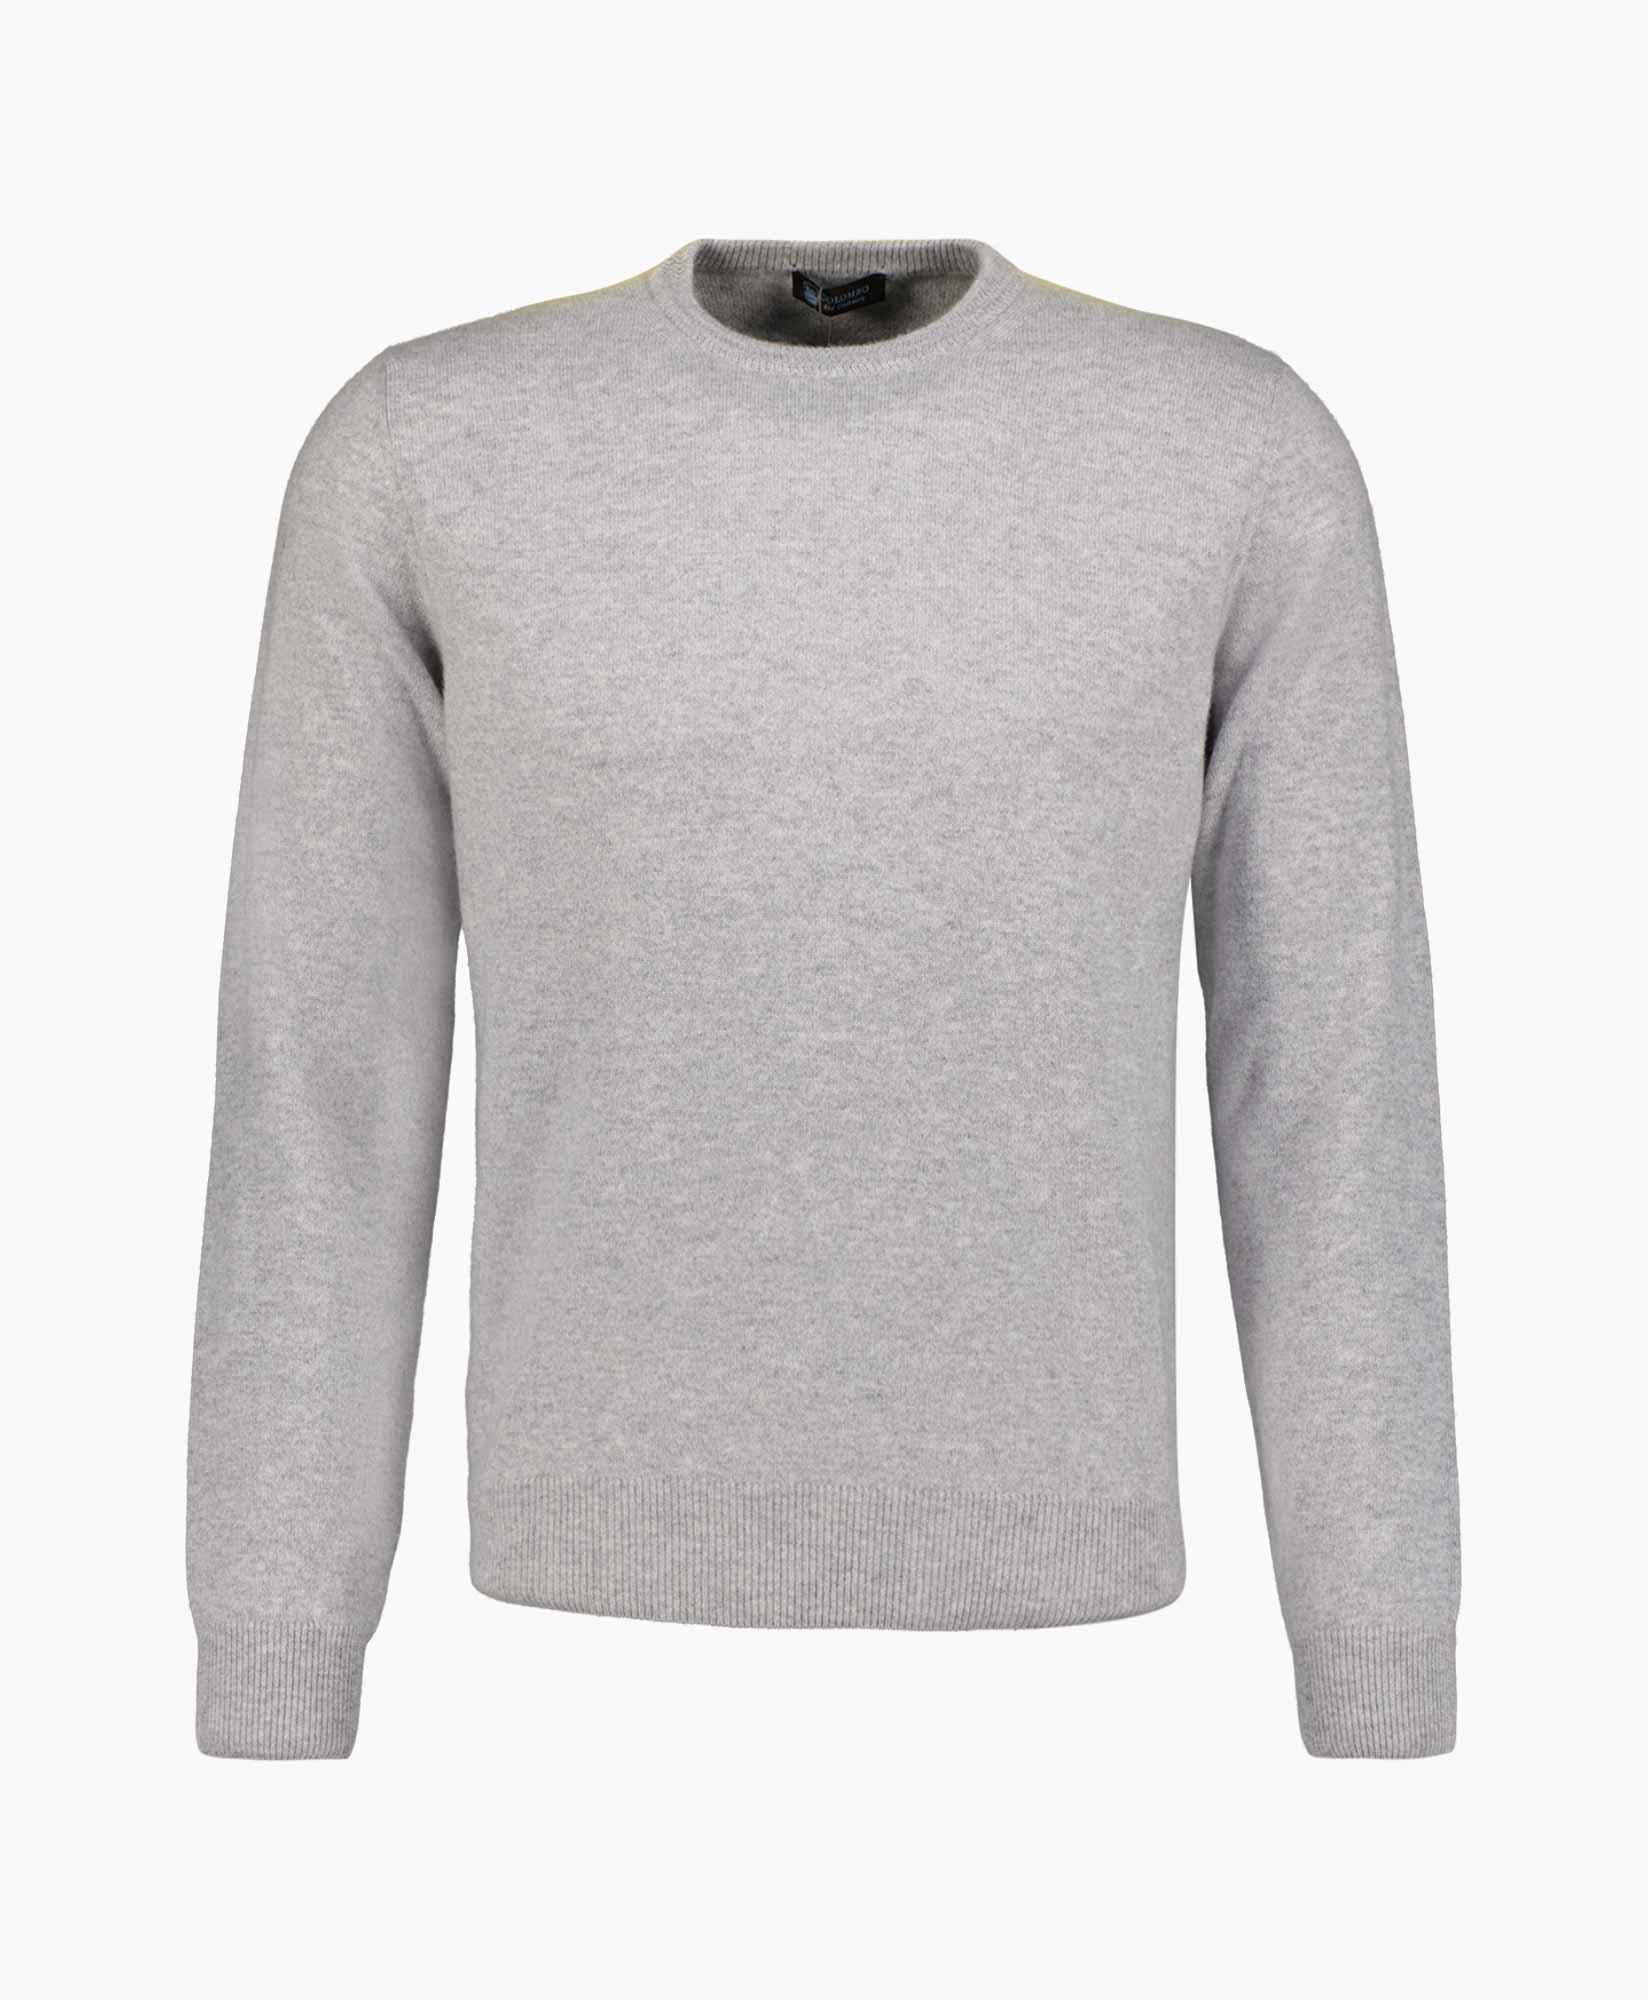 Sweater Ma01608 midden grijs